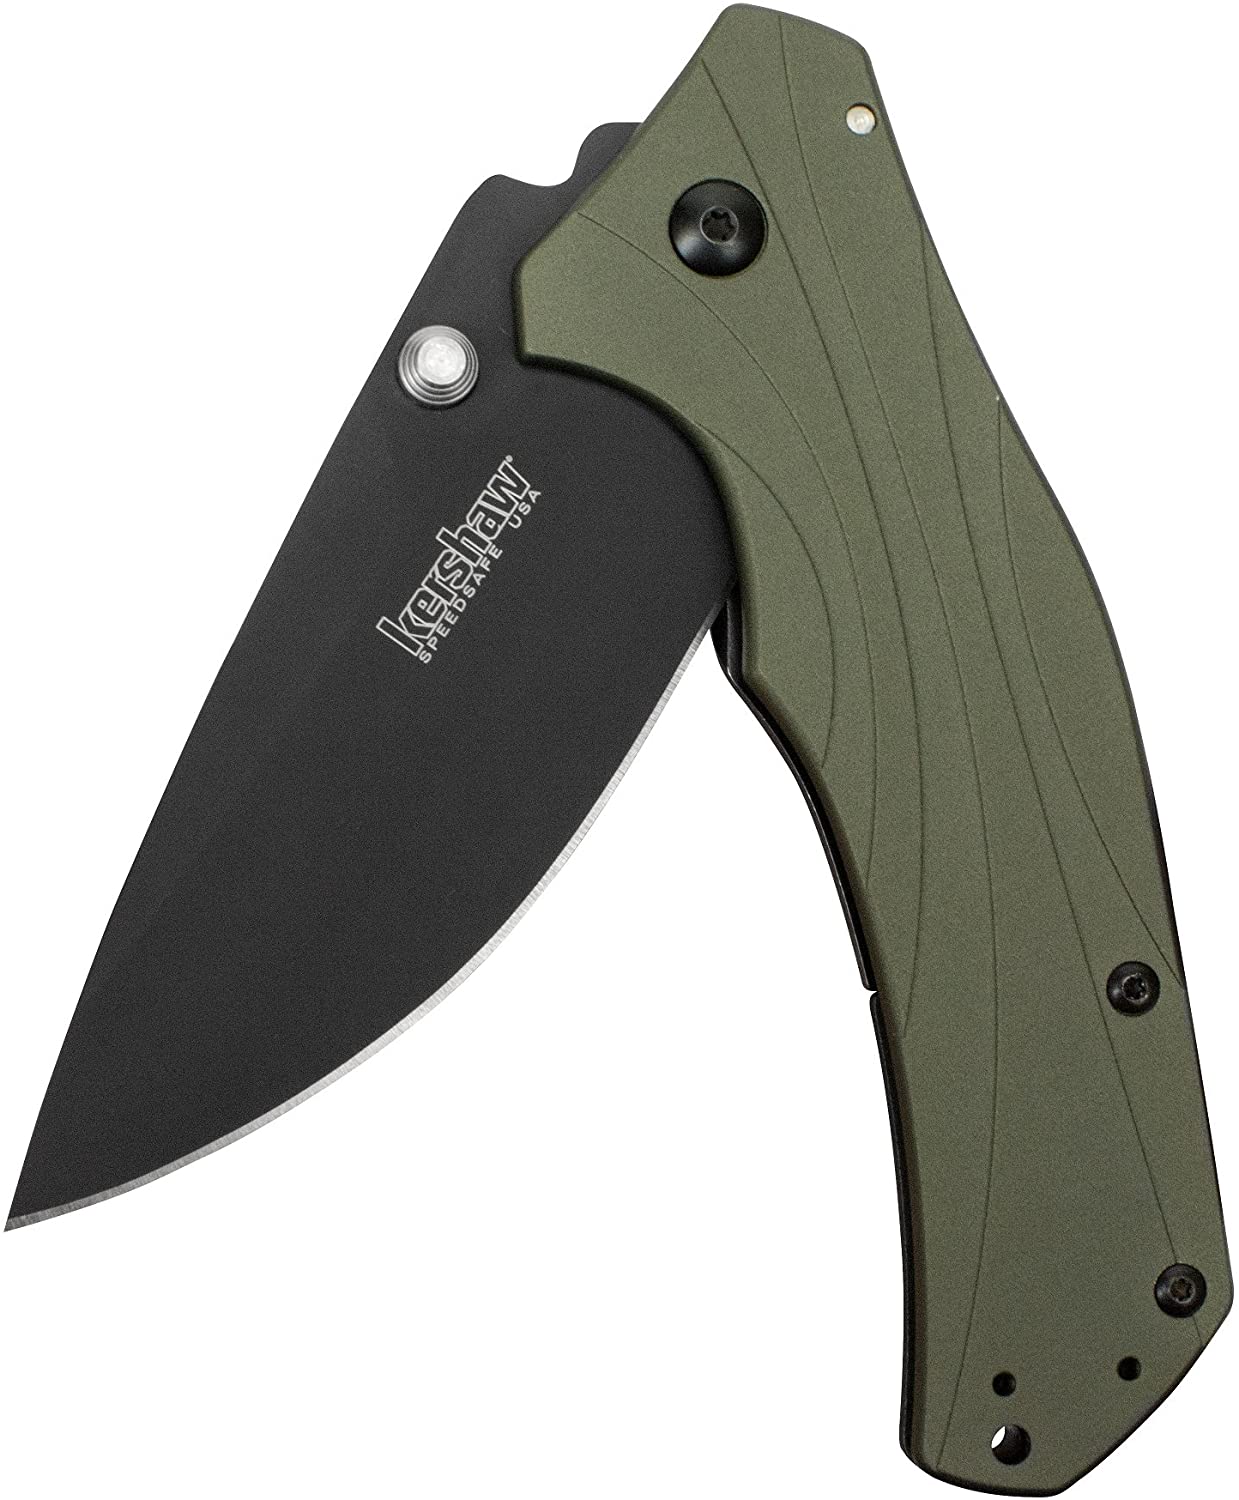 https://taskandpurpose.com/uploads/2021/04/14/Best-American-Made-Pocket-Knives-1.jpg?auto=webp